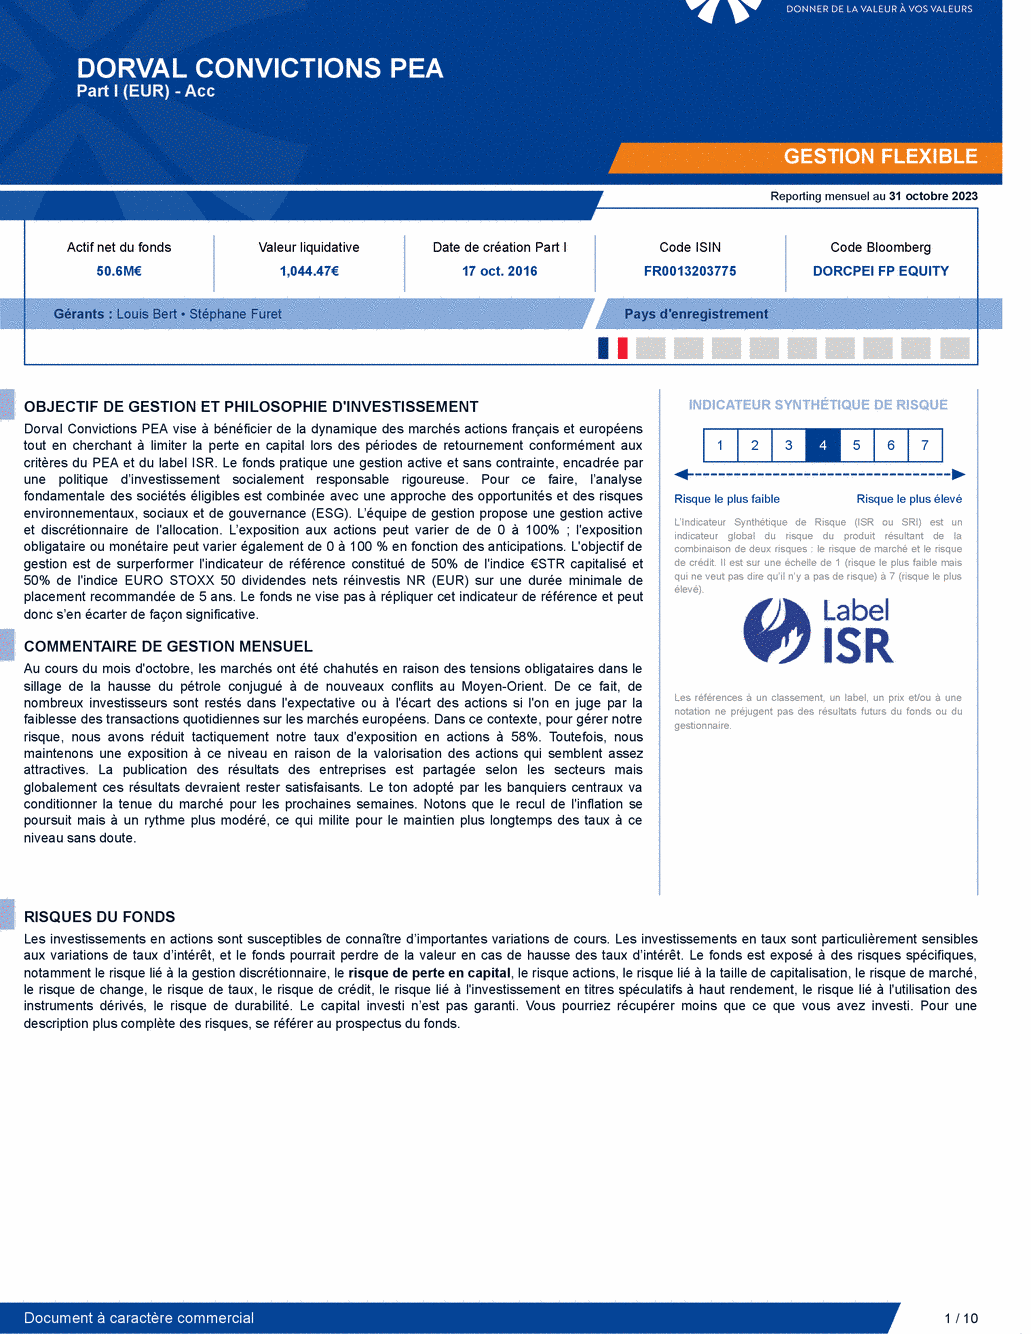 Reporting DORVAL CONVICTIONS PEA Part I - 31/10/2023 - Français